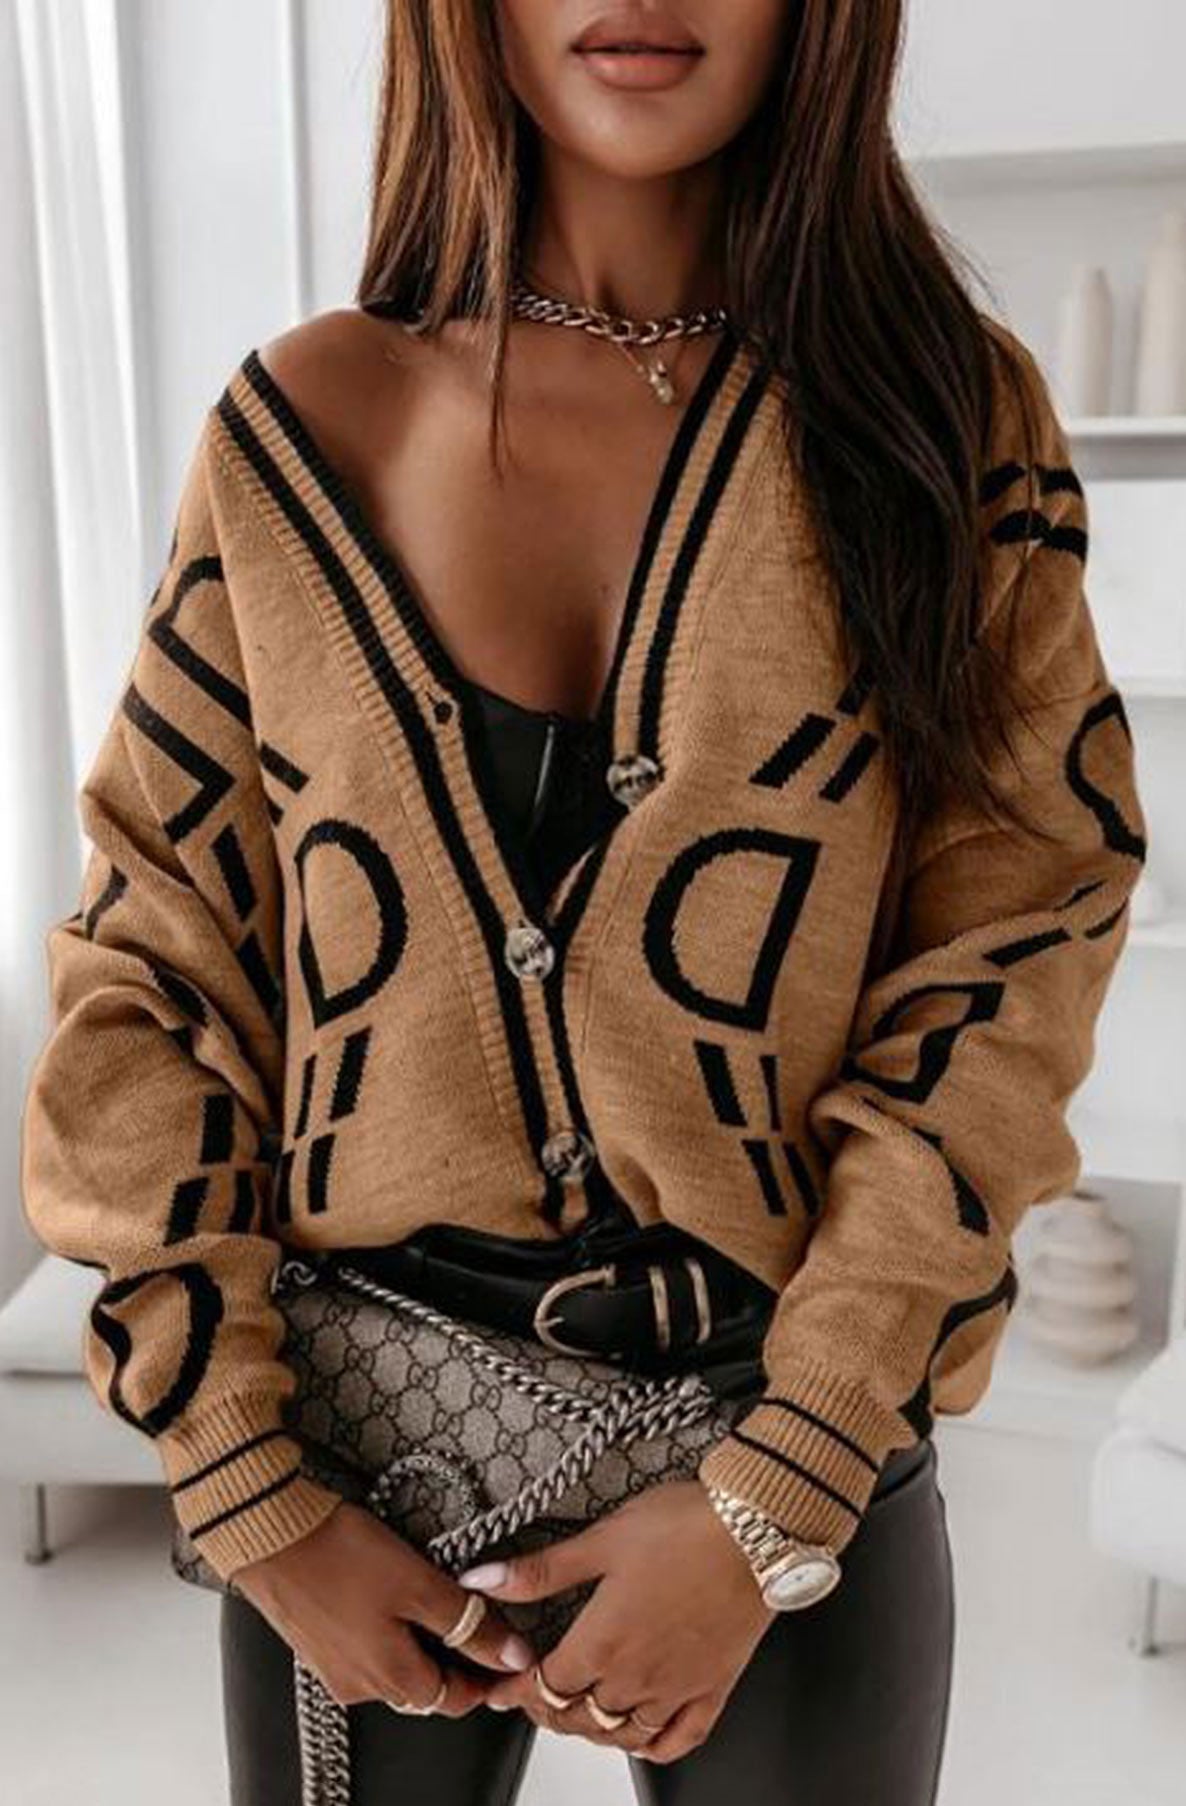 Verusha 'DD' Alphabet Print Knitted Sweater Cardigan-Camel